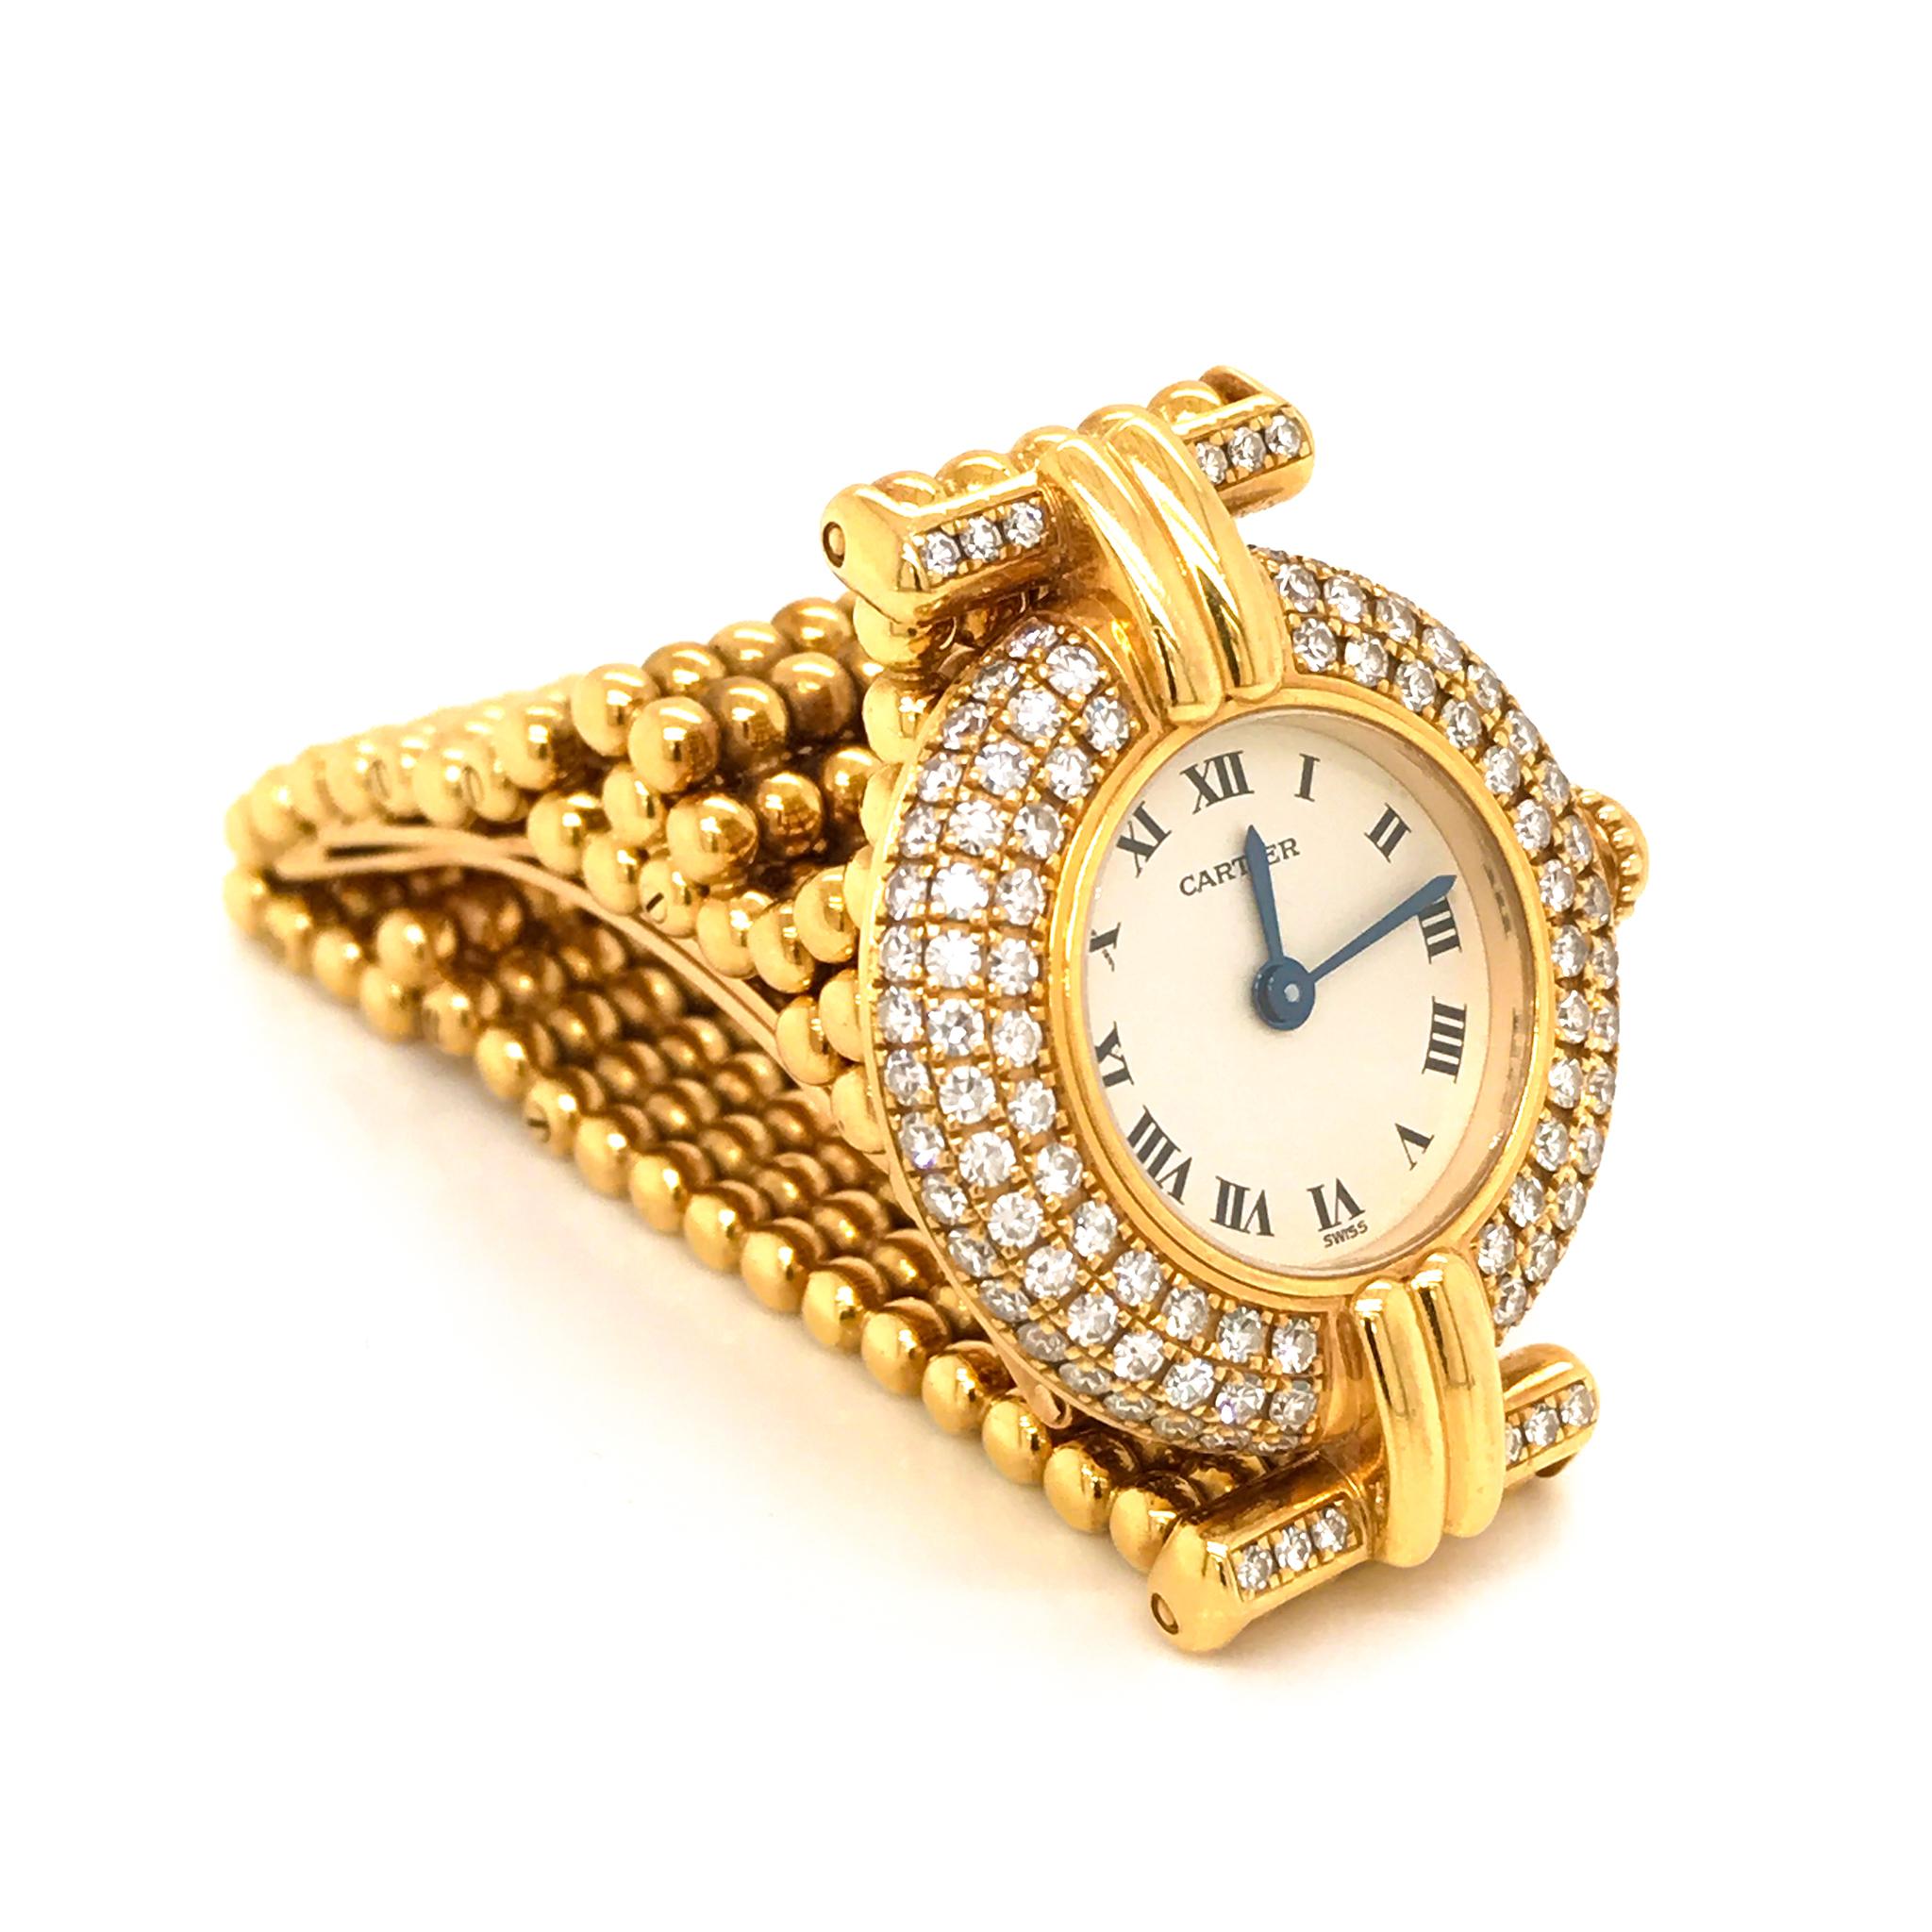 Cartier 18 Karat Yellow Gold and Diamond Colisee Women's Watch 1